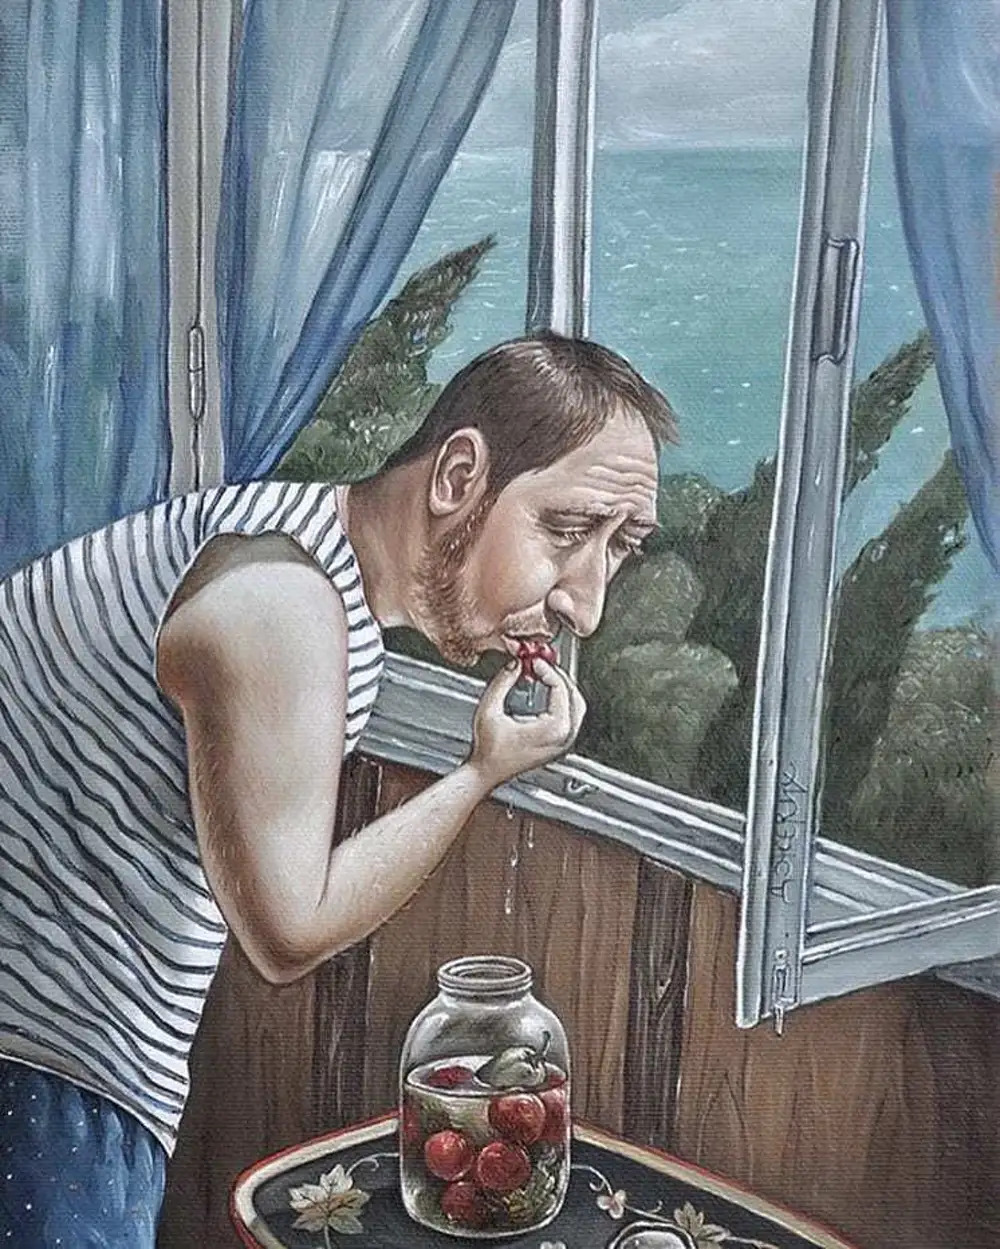 Картина Анджелы Джерих "Соленый бриз"